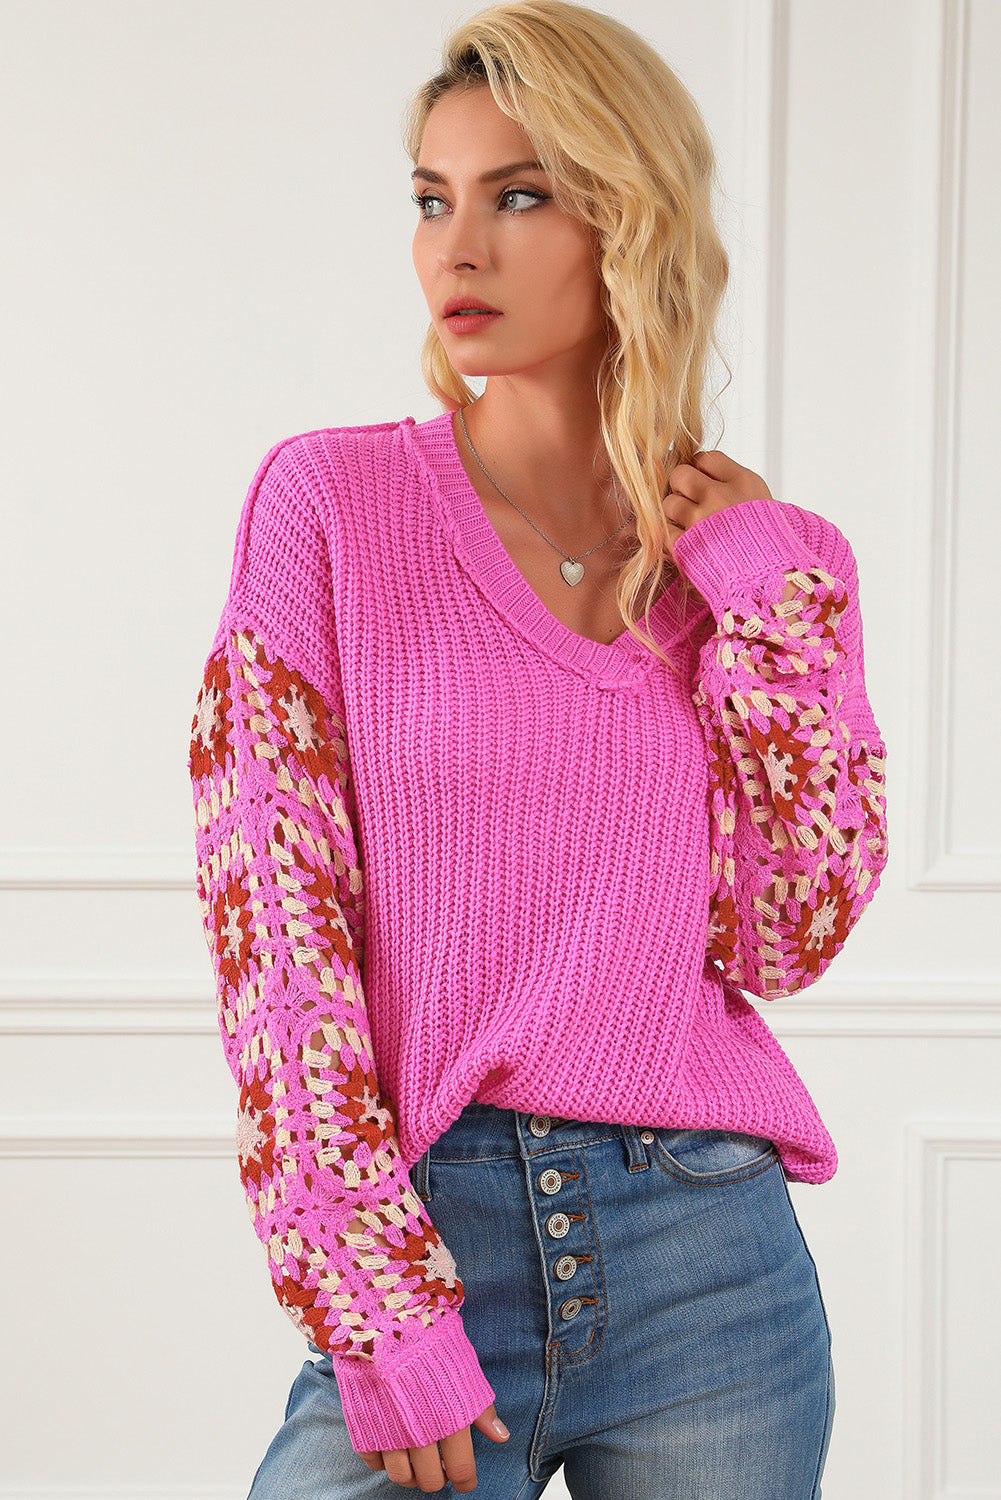 Pull à col en V en tricot torsadé au crochet floral rose